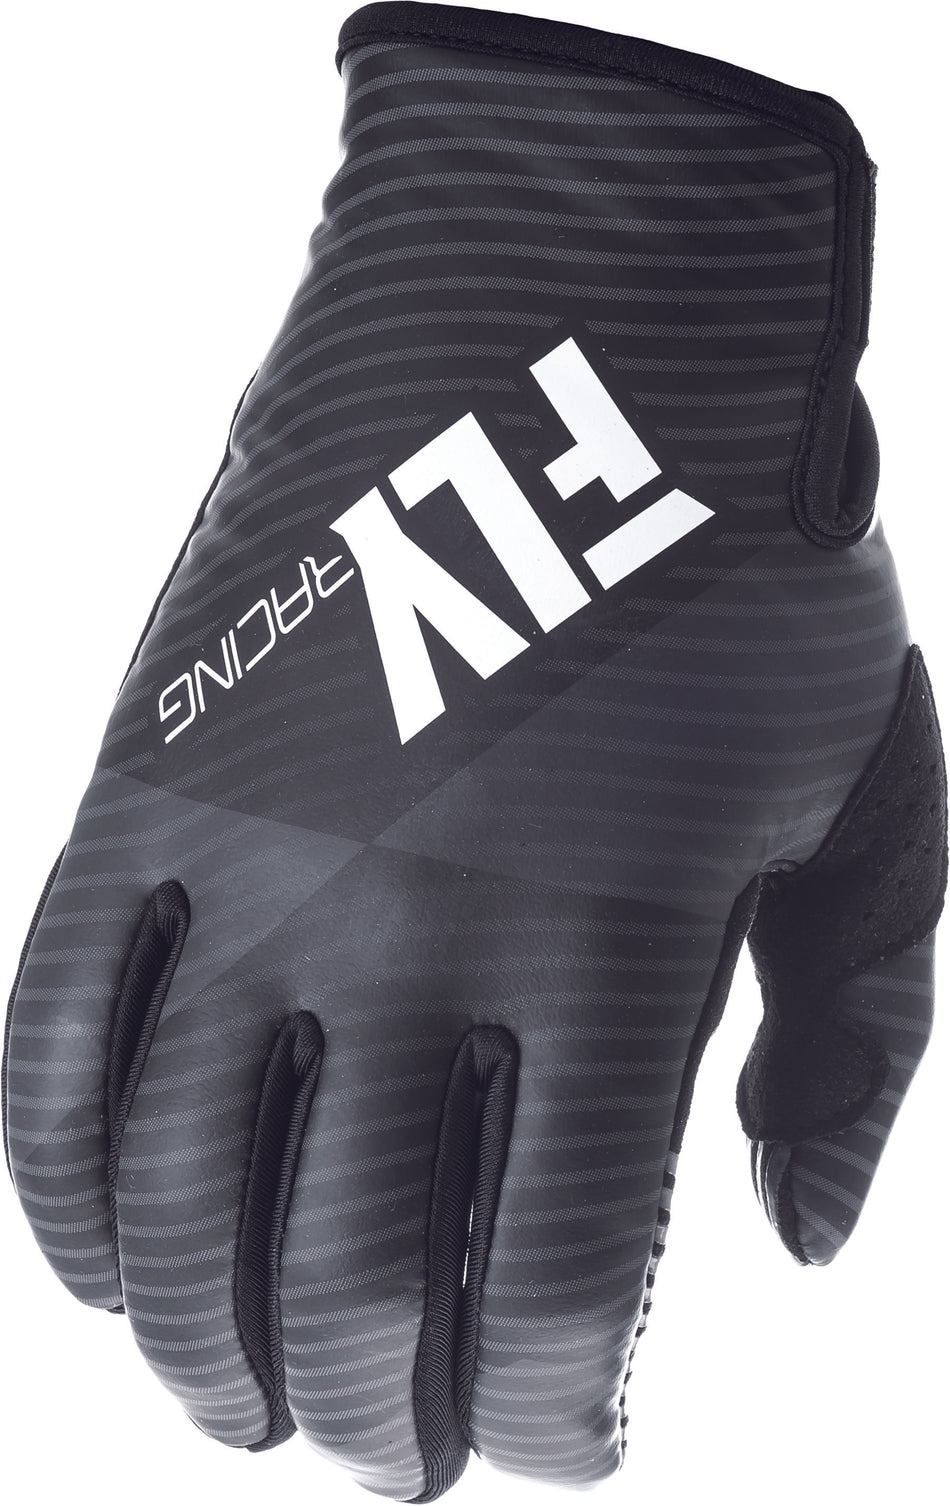 FLY RACING 907 Neoprene Gloves Black/Grey Sz 8 369-64008